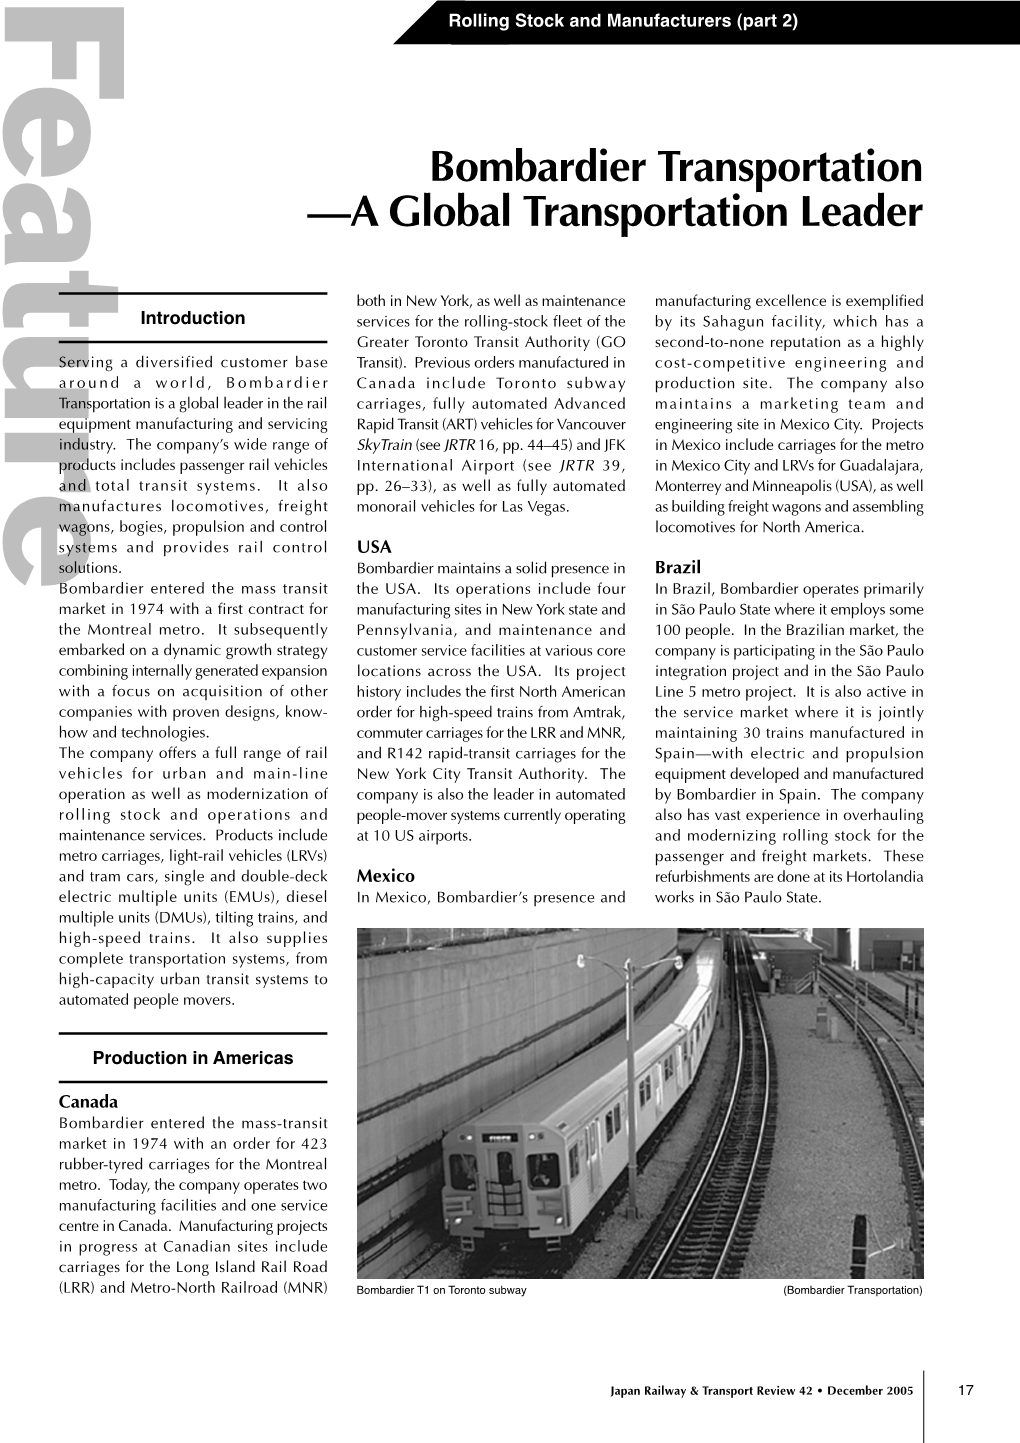 Bombardier Transportation —A Global Transportation Leader